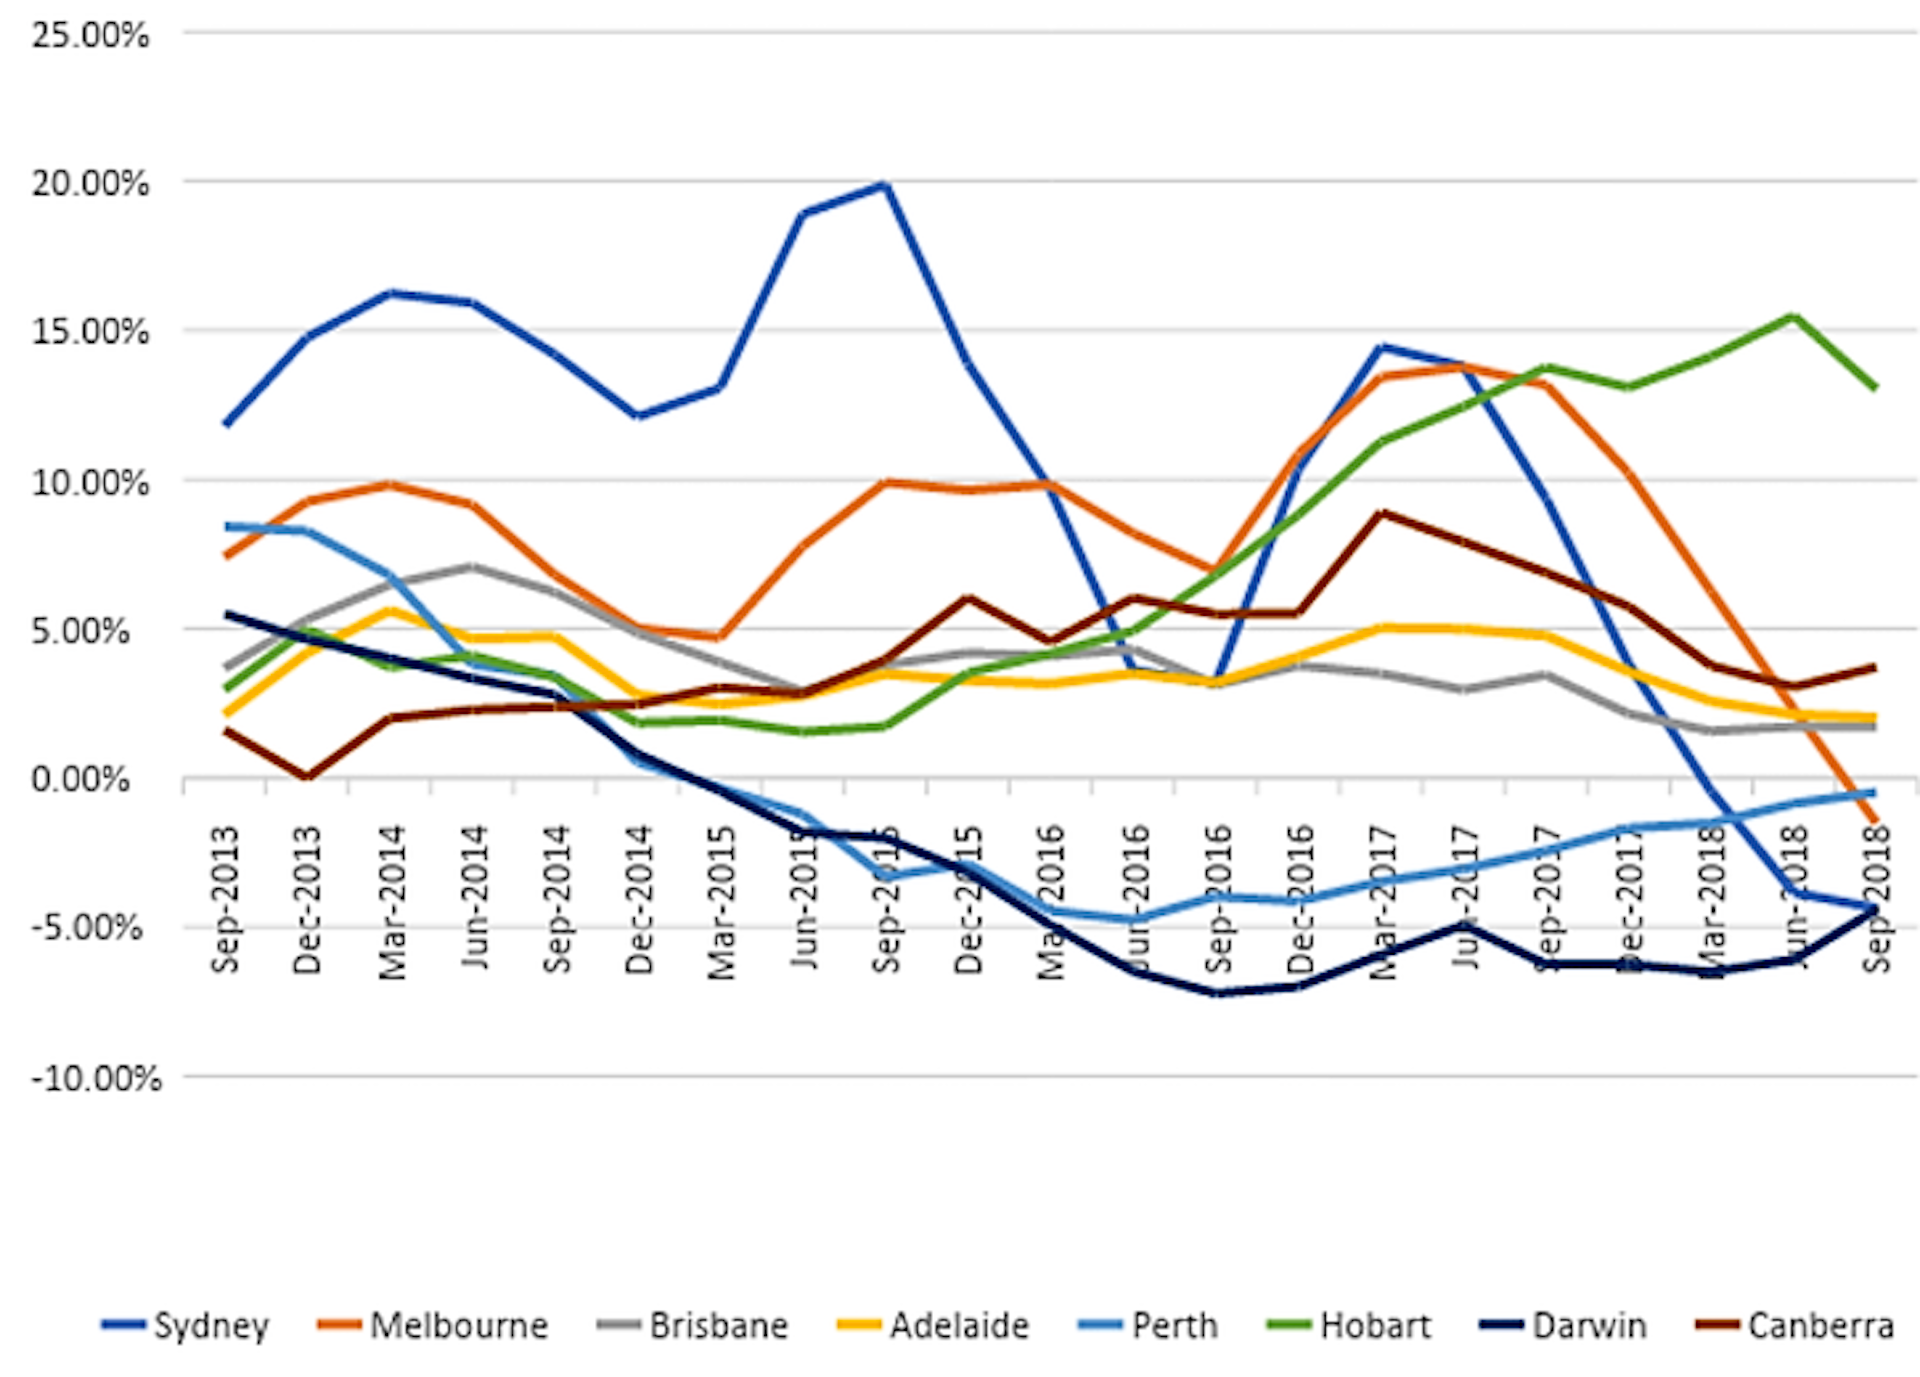 Sydney Property Price Chart